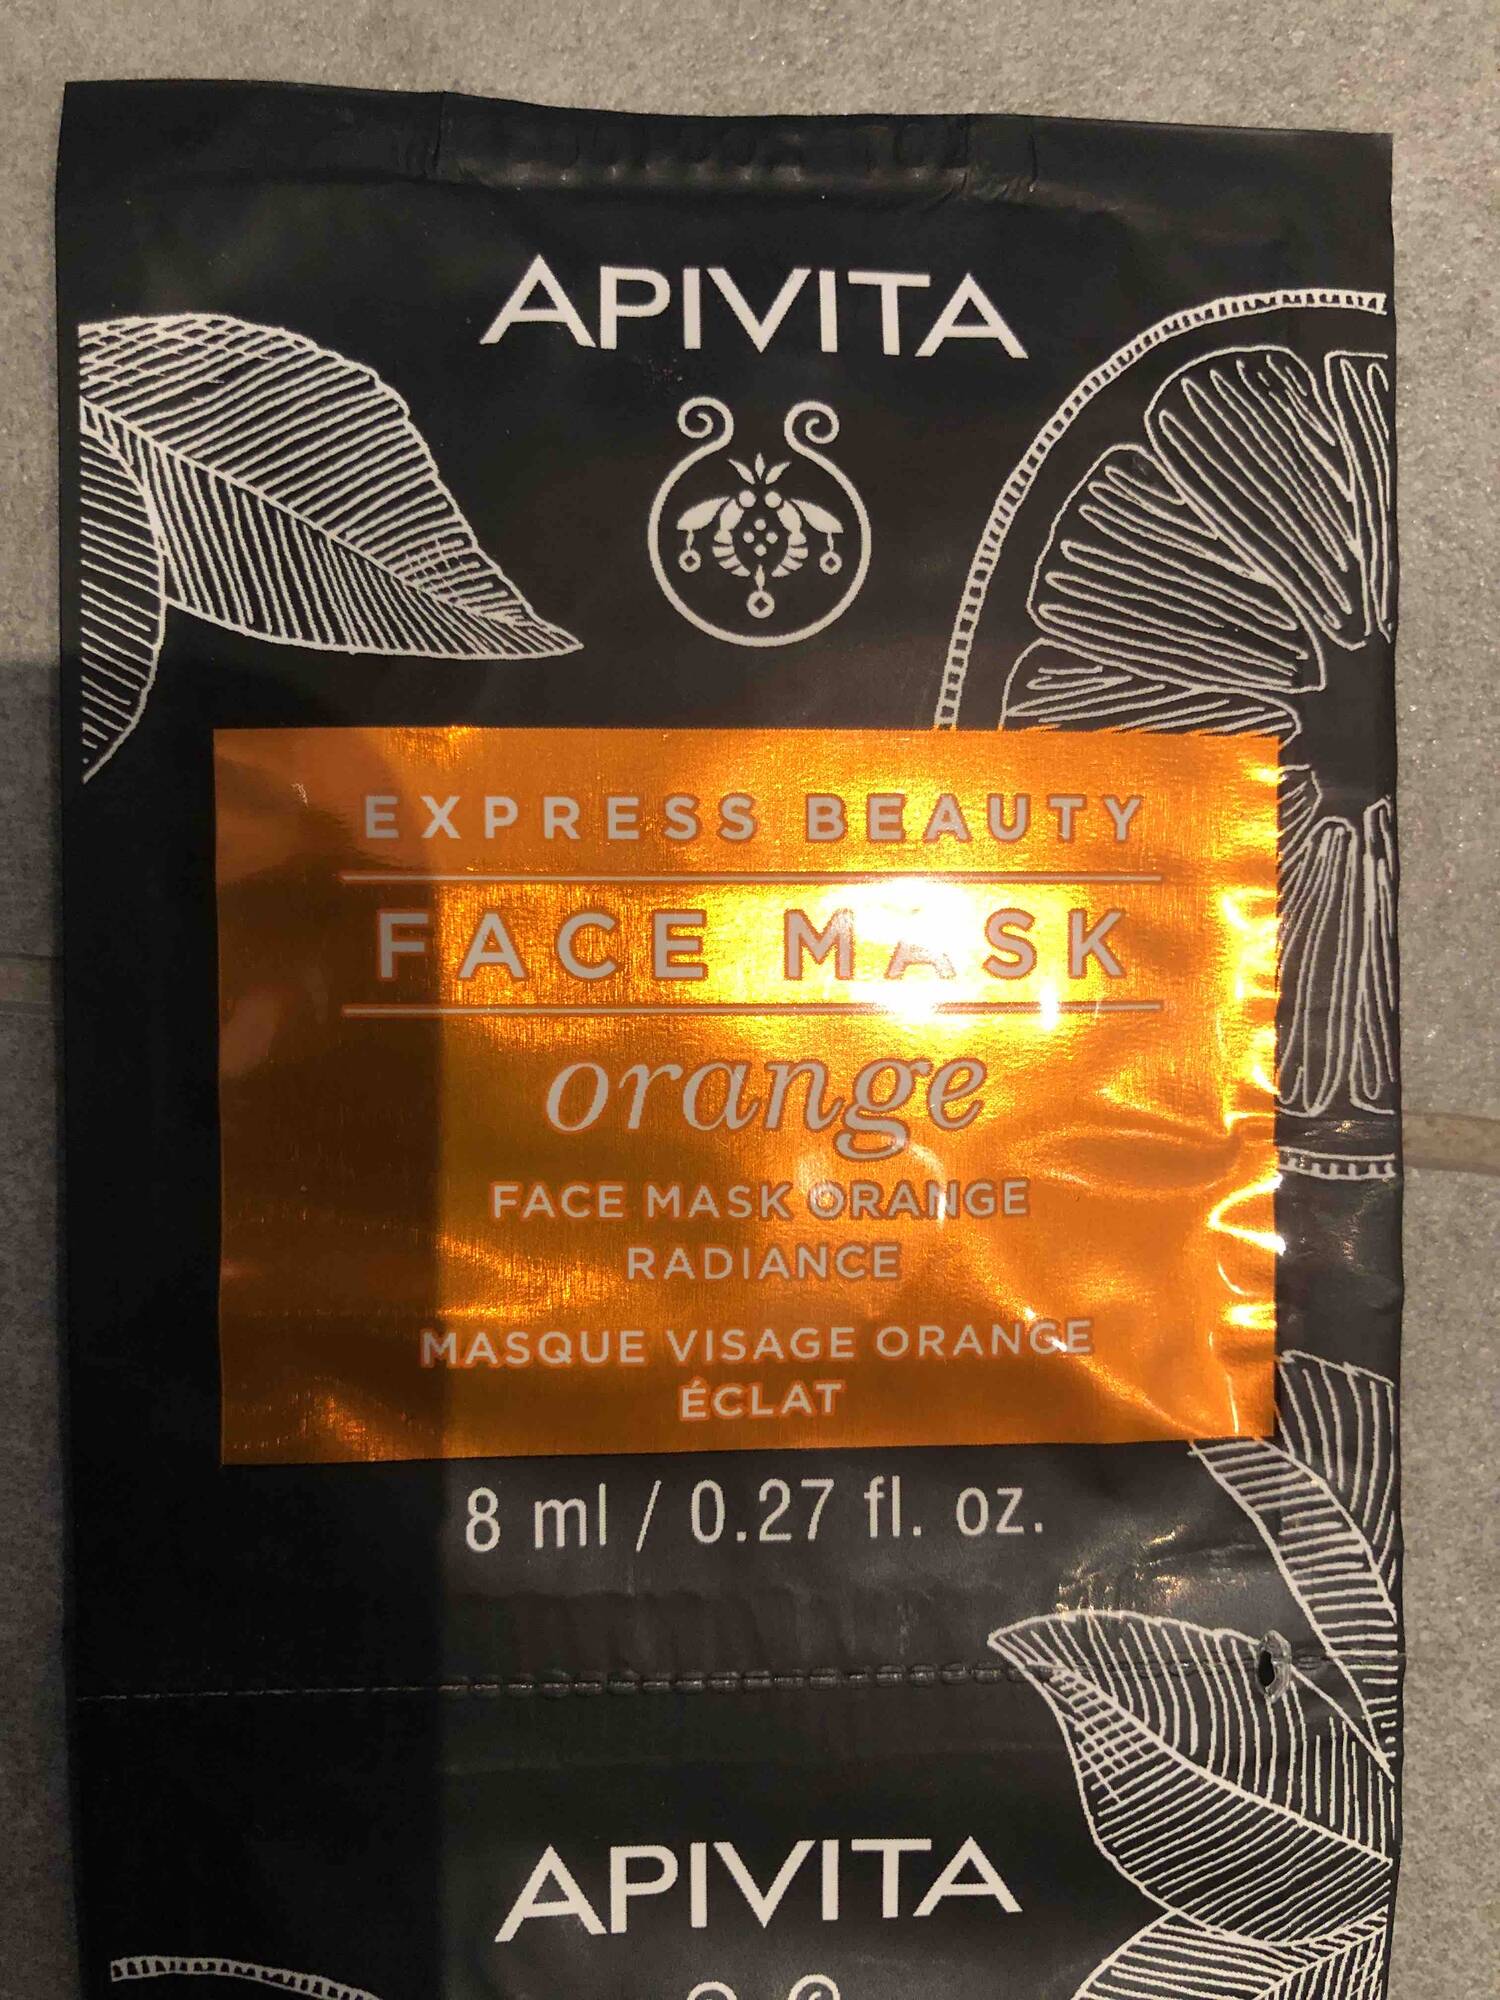 APIVITA - Express beauty - Masque visage orange éclat